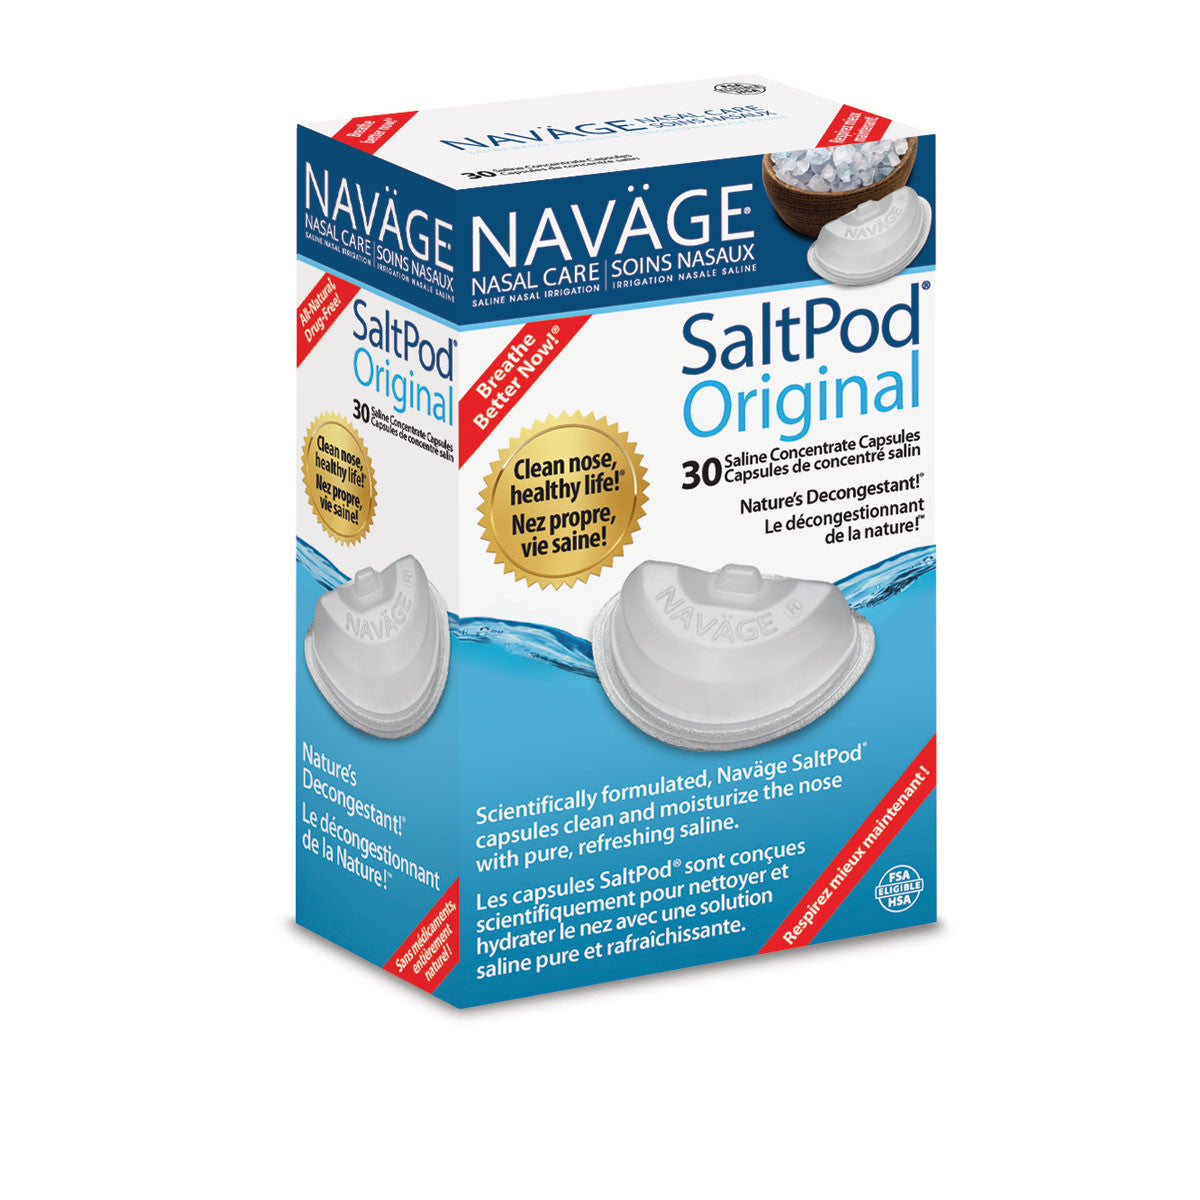 SALT-AWAY Salt-Away Treatment Kit with Mixing Unit